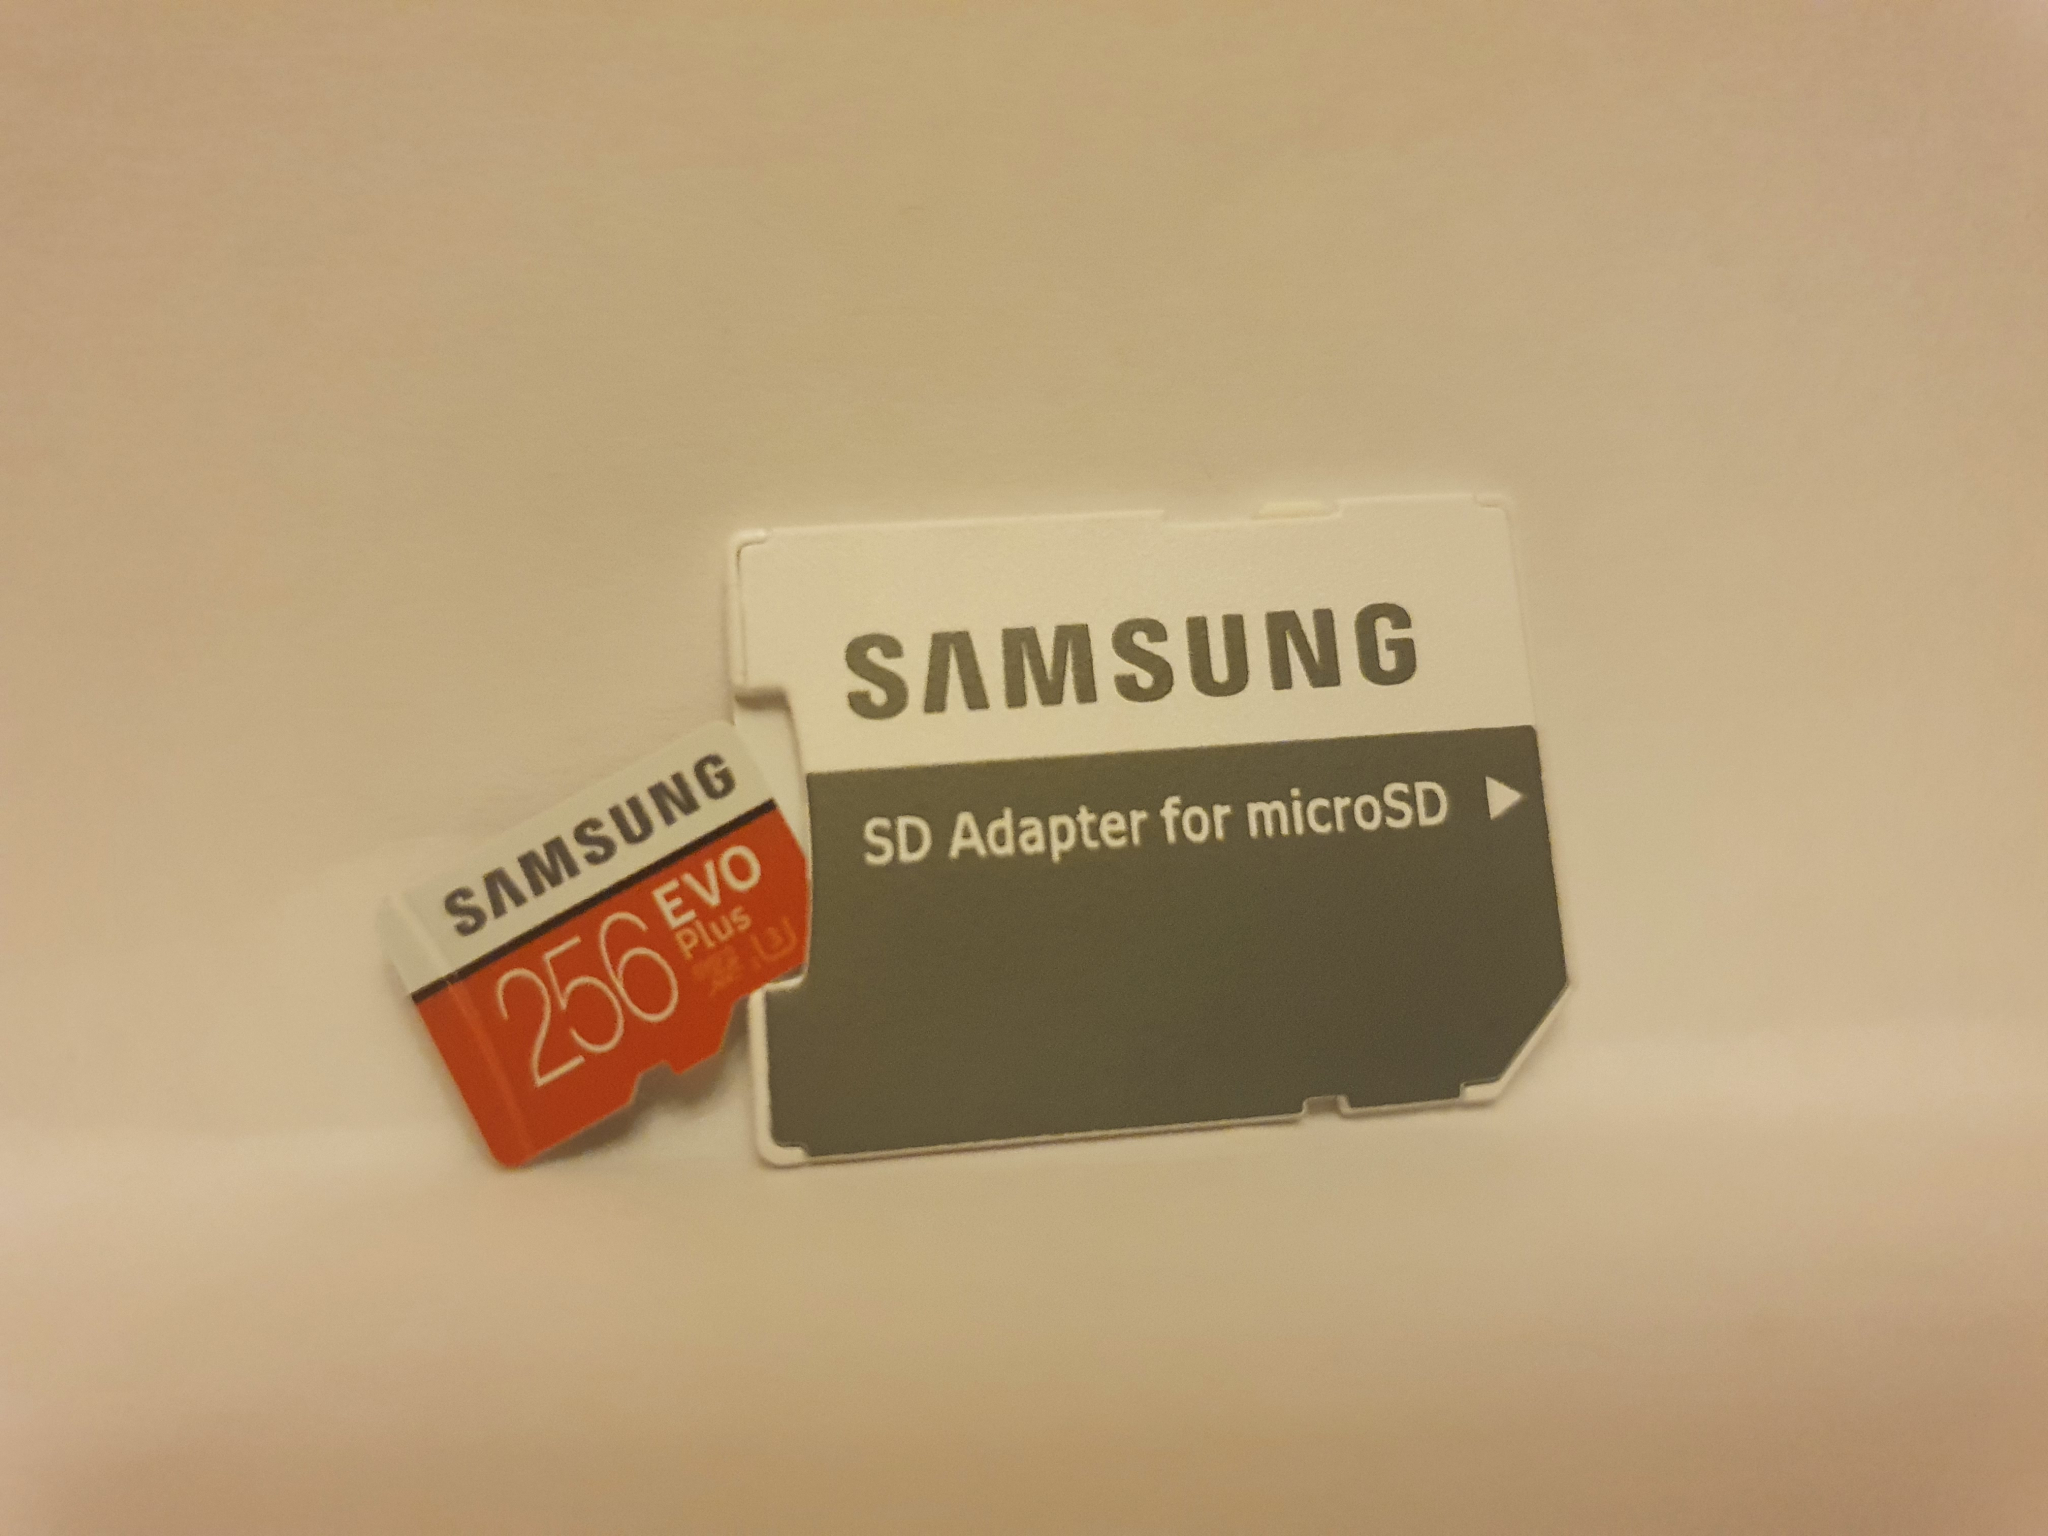 Samsung Evo Plus 256gb Ssd